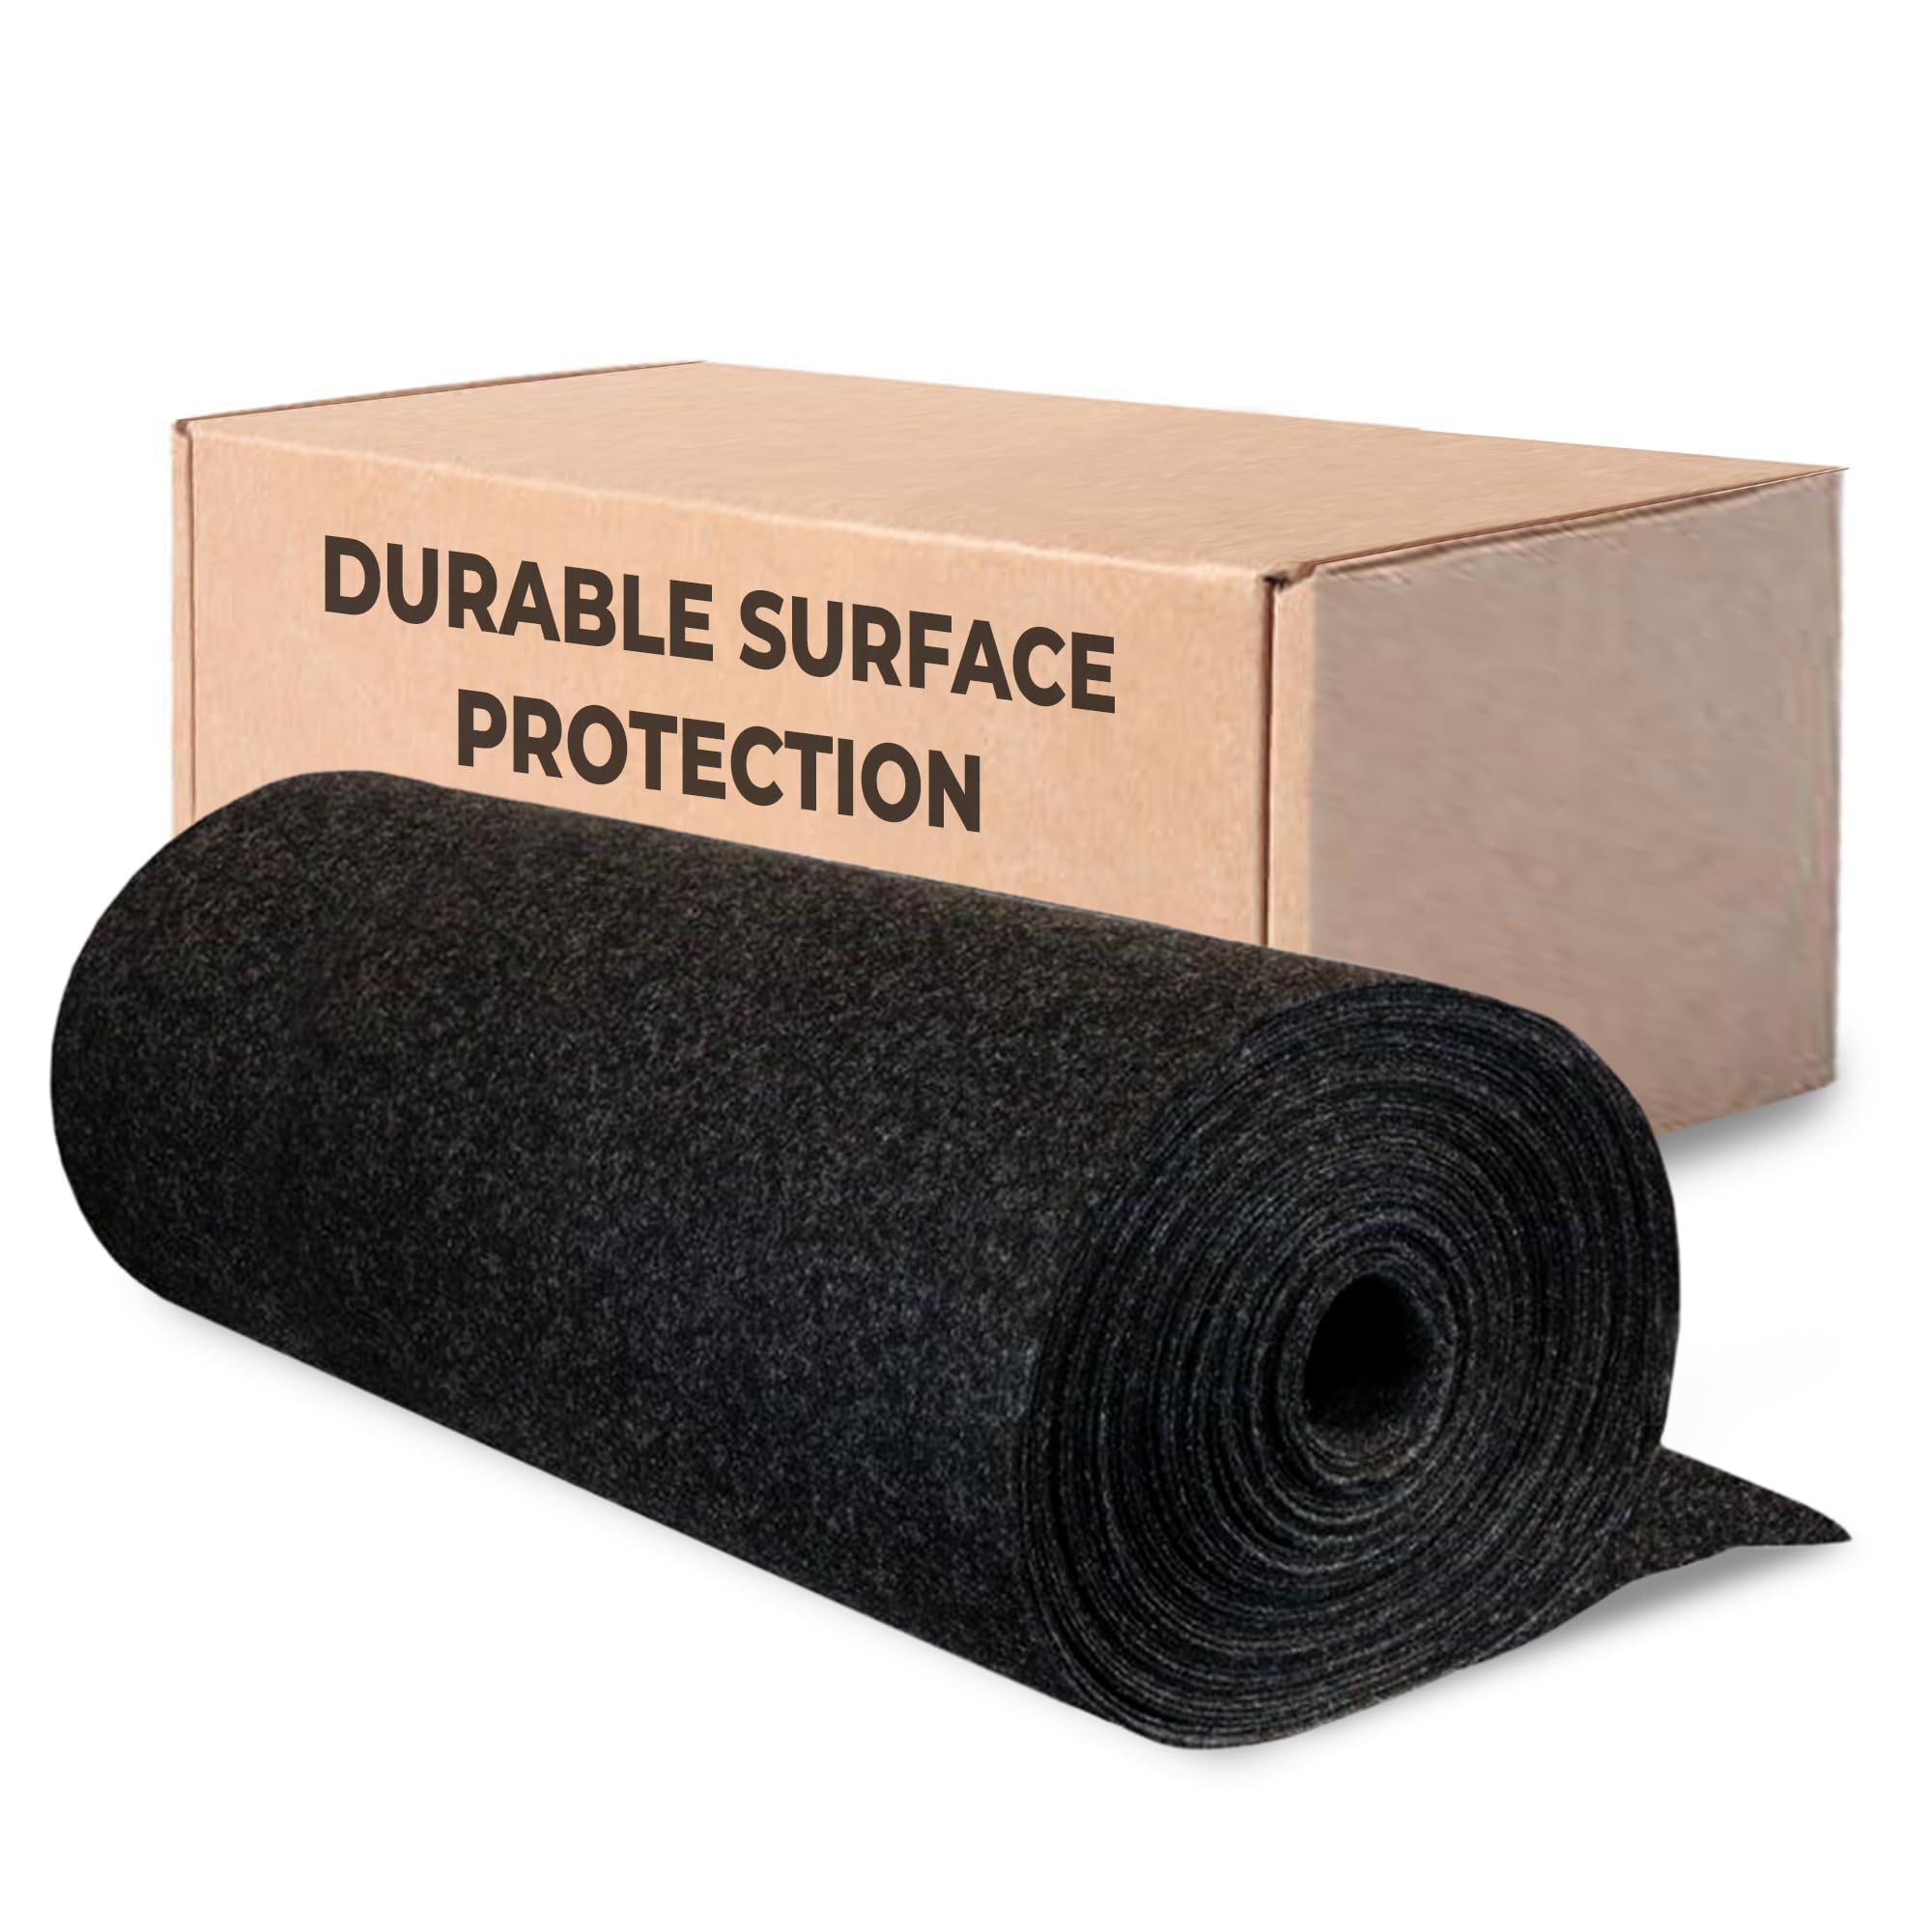 Bbox Black Carpet & Non-Woven Febric | Length: 78 inch (6.6 ft.), Width: 40 inch (3.2 ft.) | for Speaker Sub Box Carpet Home, Auto, RV, Boat, Marine, Truck & Car Trunk Liner